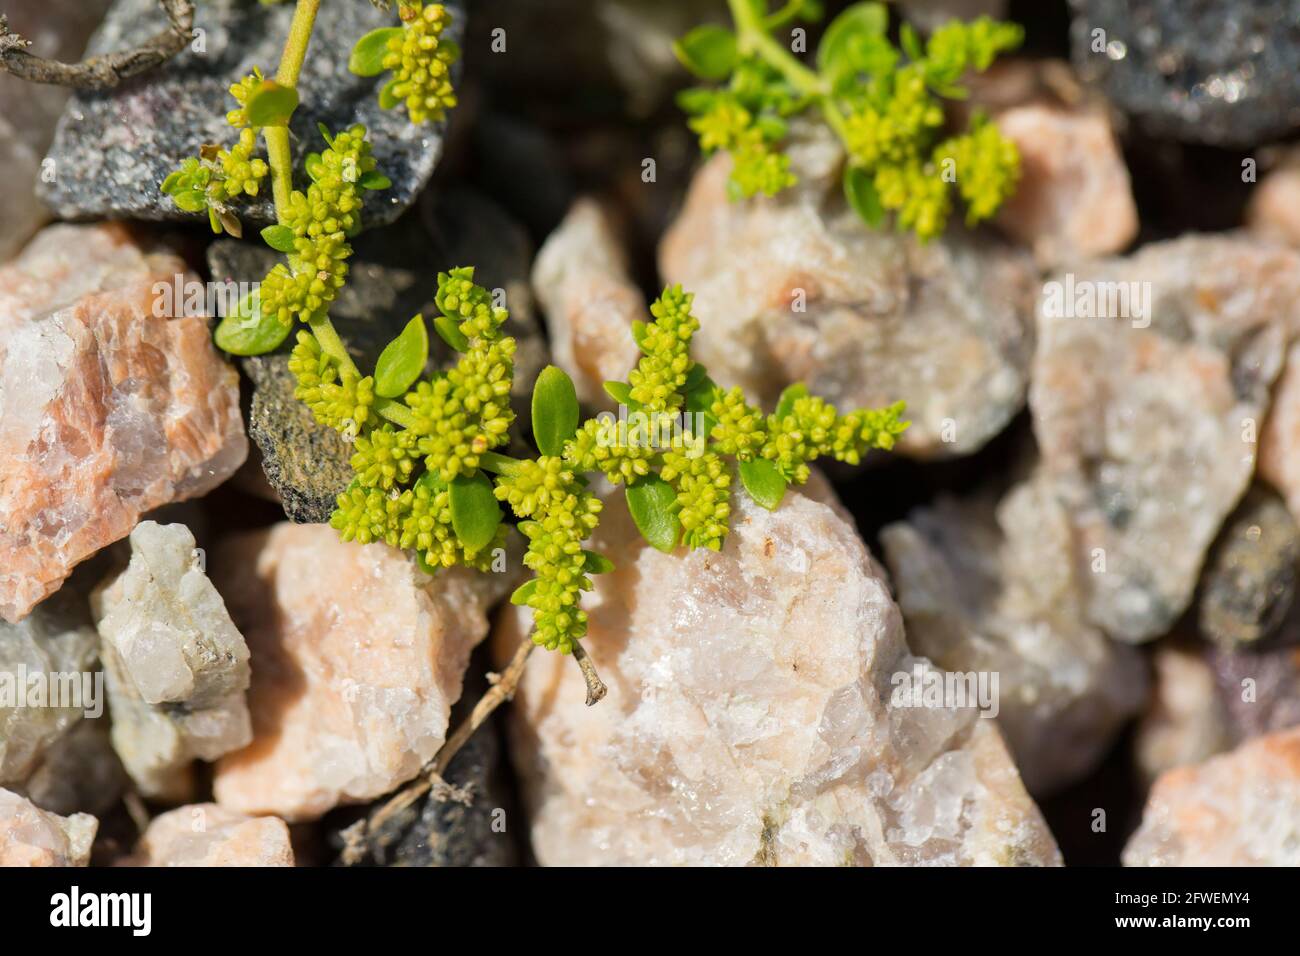 Smooth rupturewort (Herniaria glabra) Stock Photo